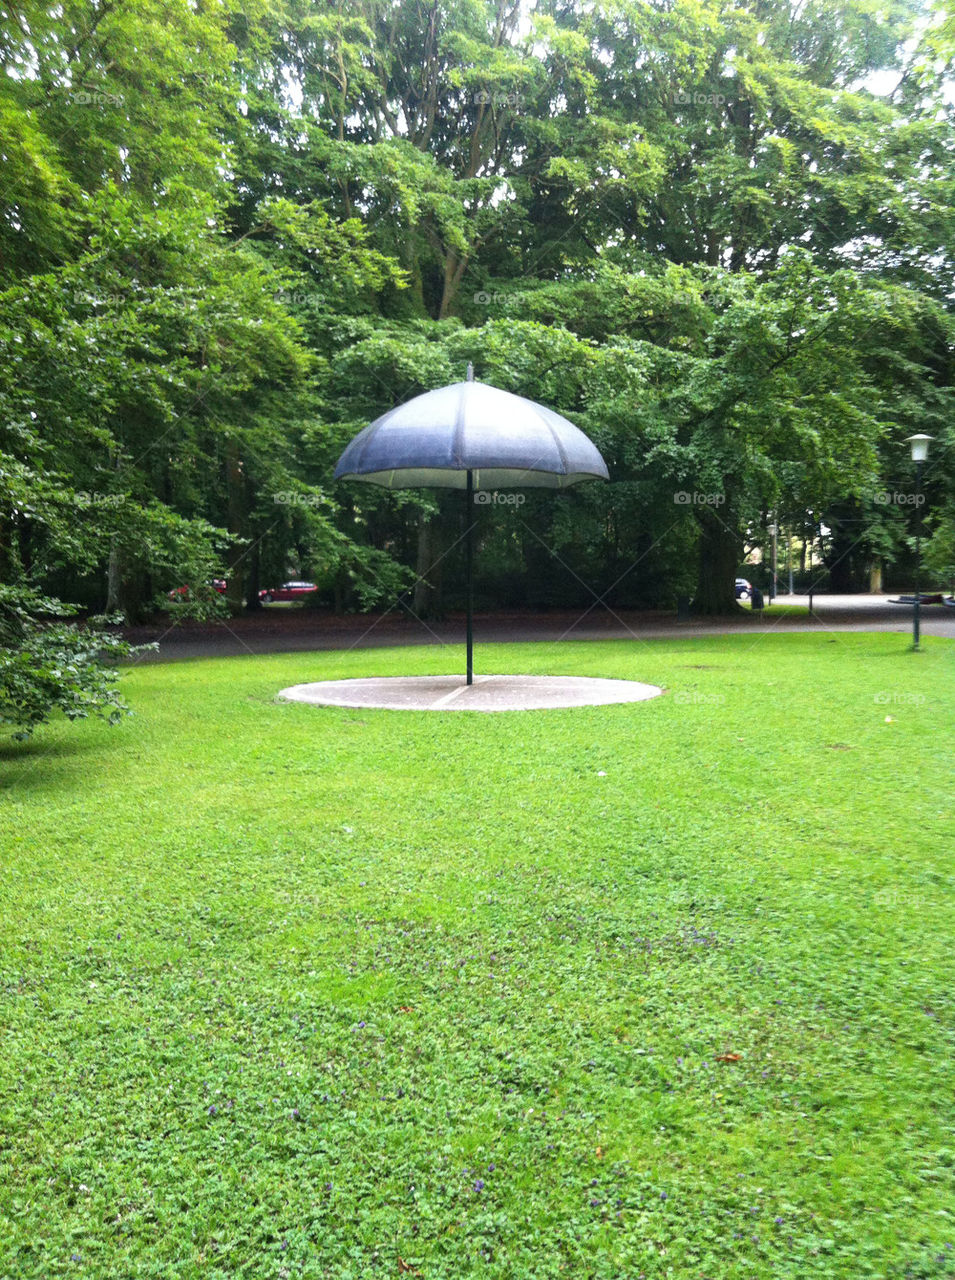 malmö sweden park umbrella by kimberkhuizen